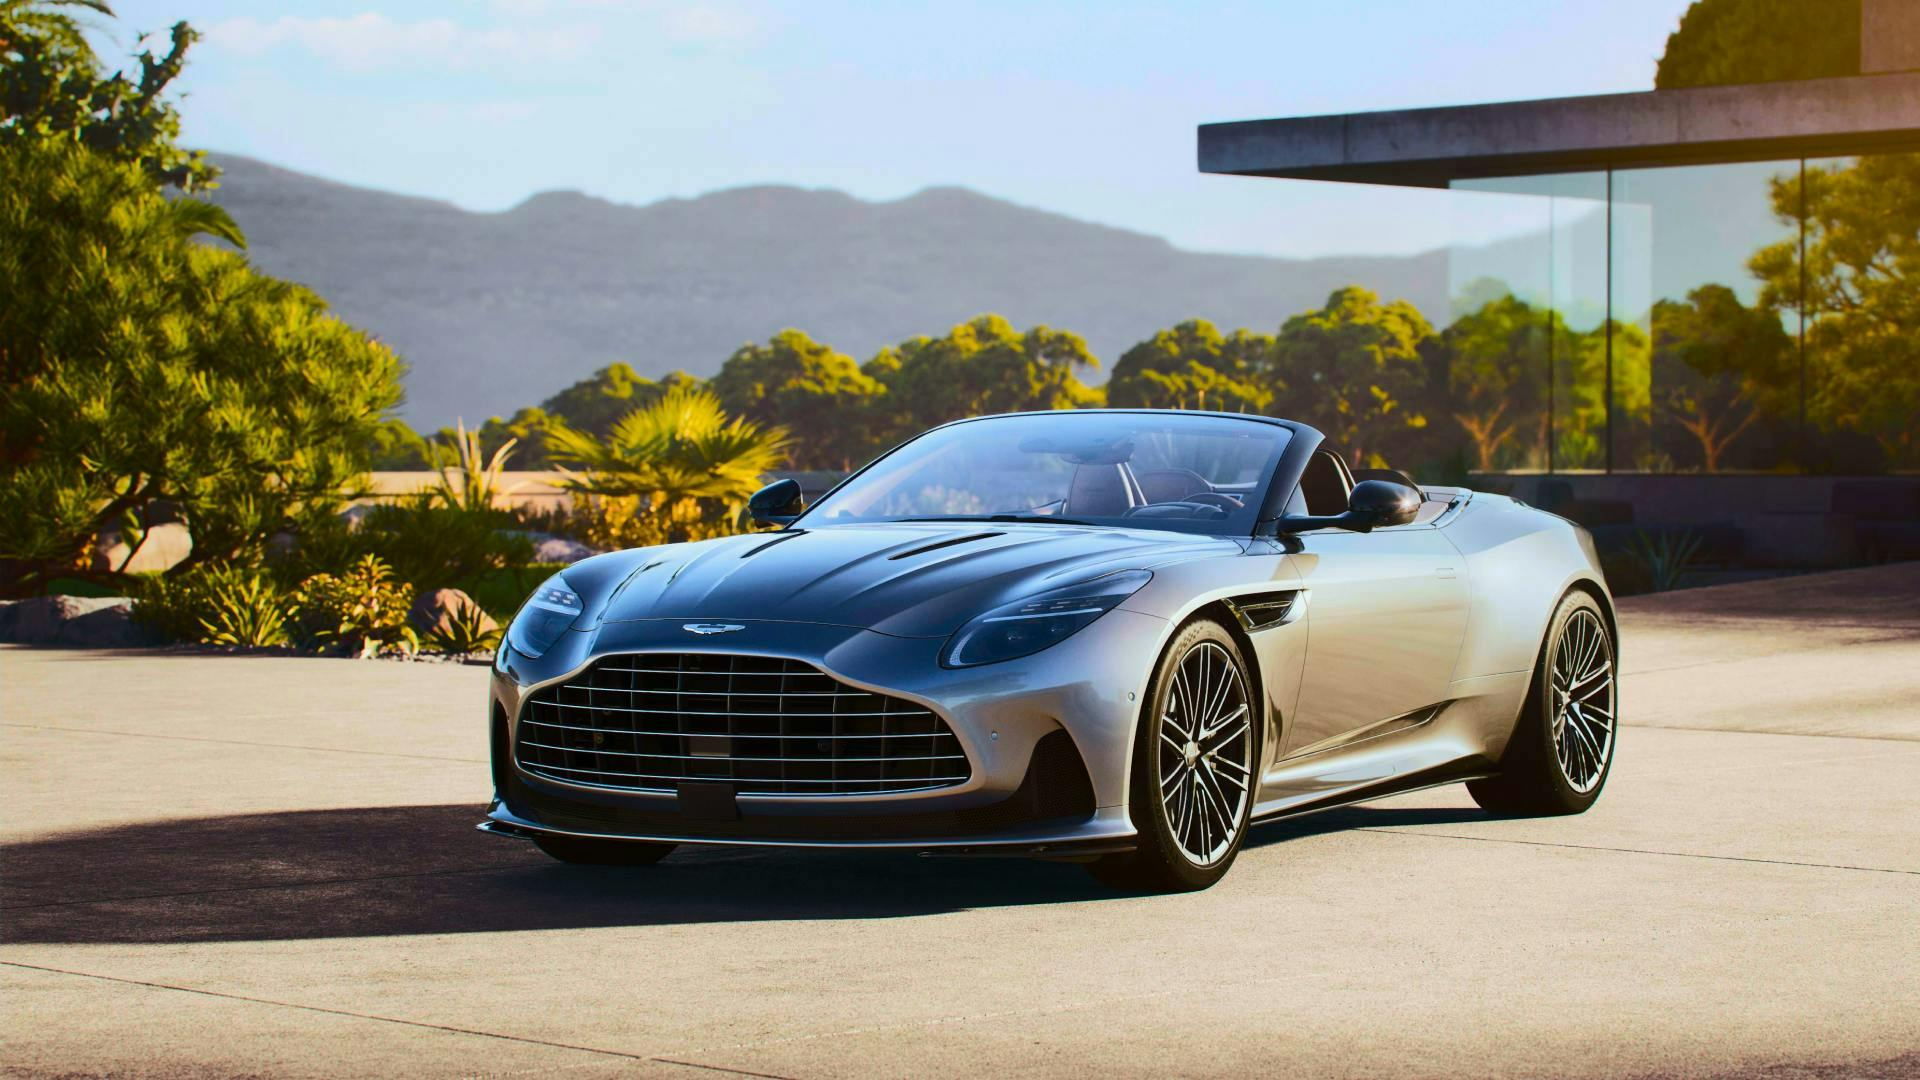 Aston Martin Announces 4% Pay Raise for UK Employees